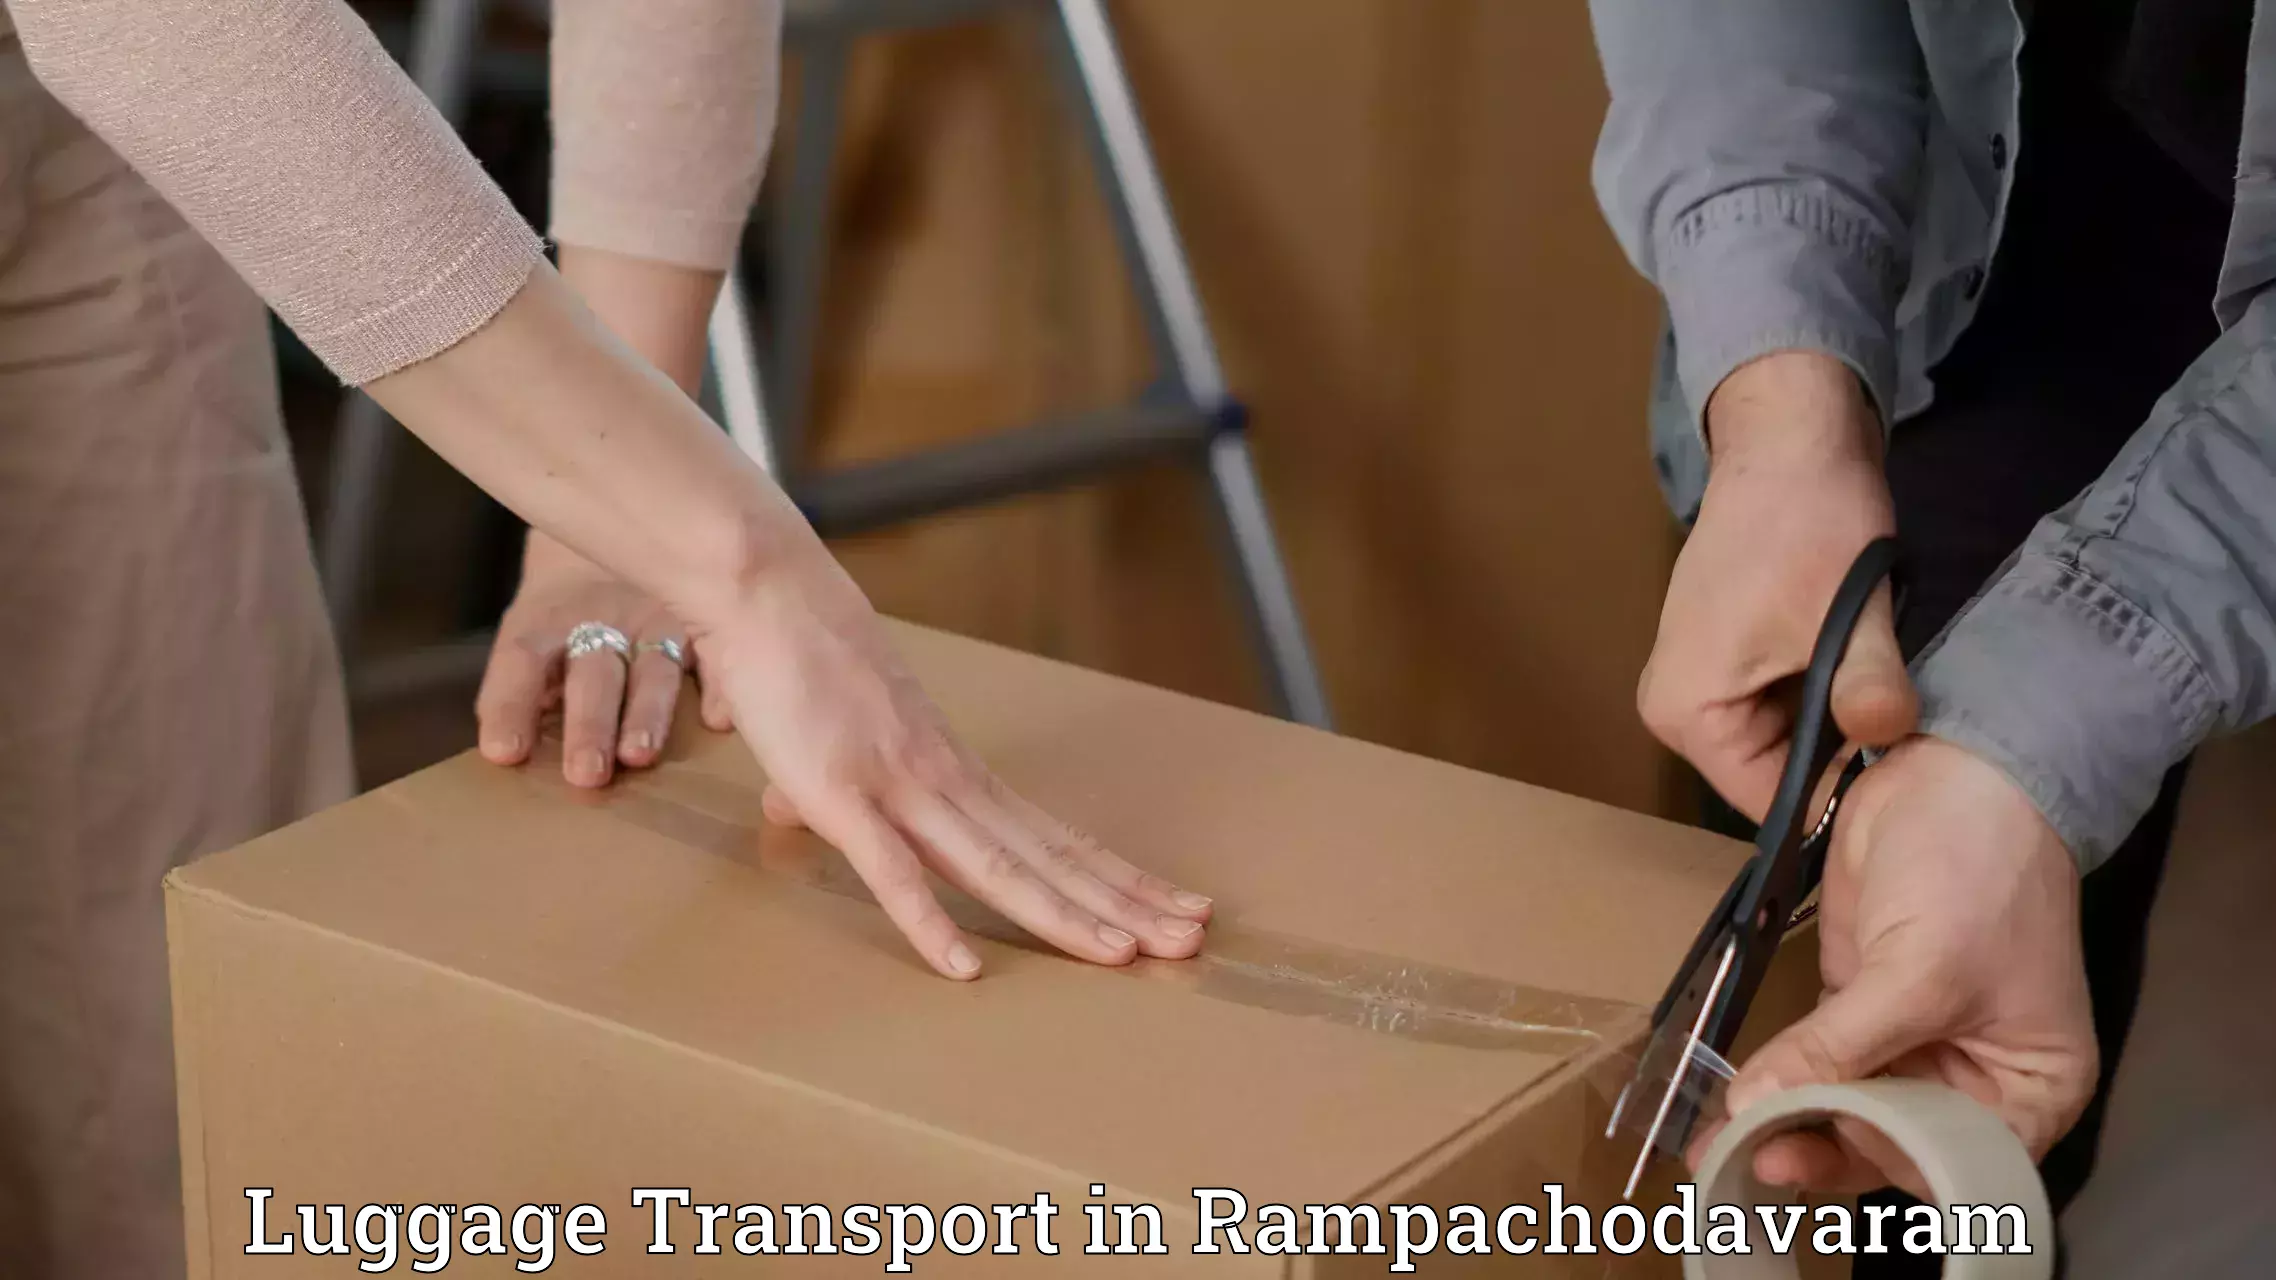 Luggage transport pricing in Rampachodavaram